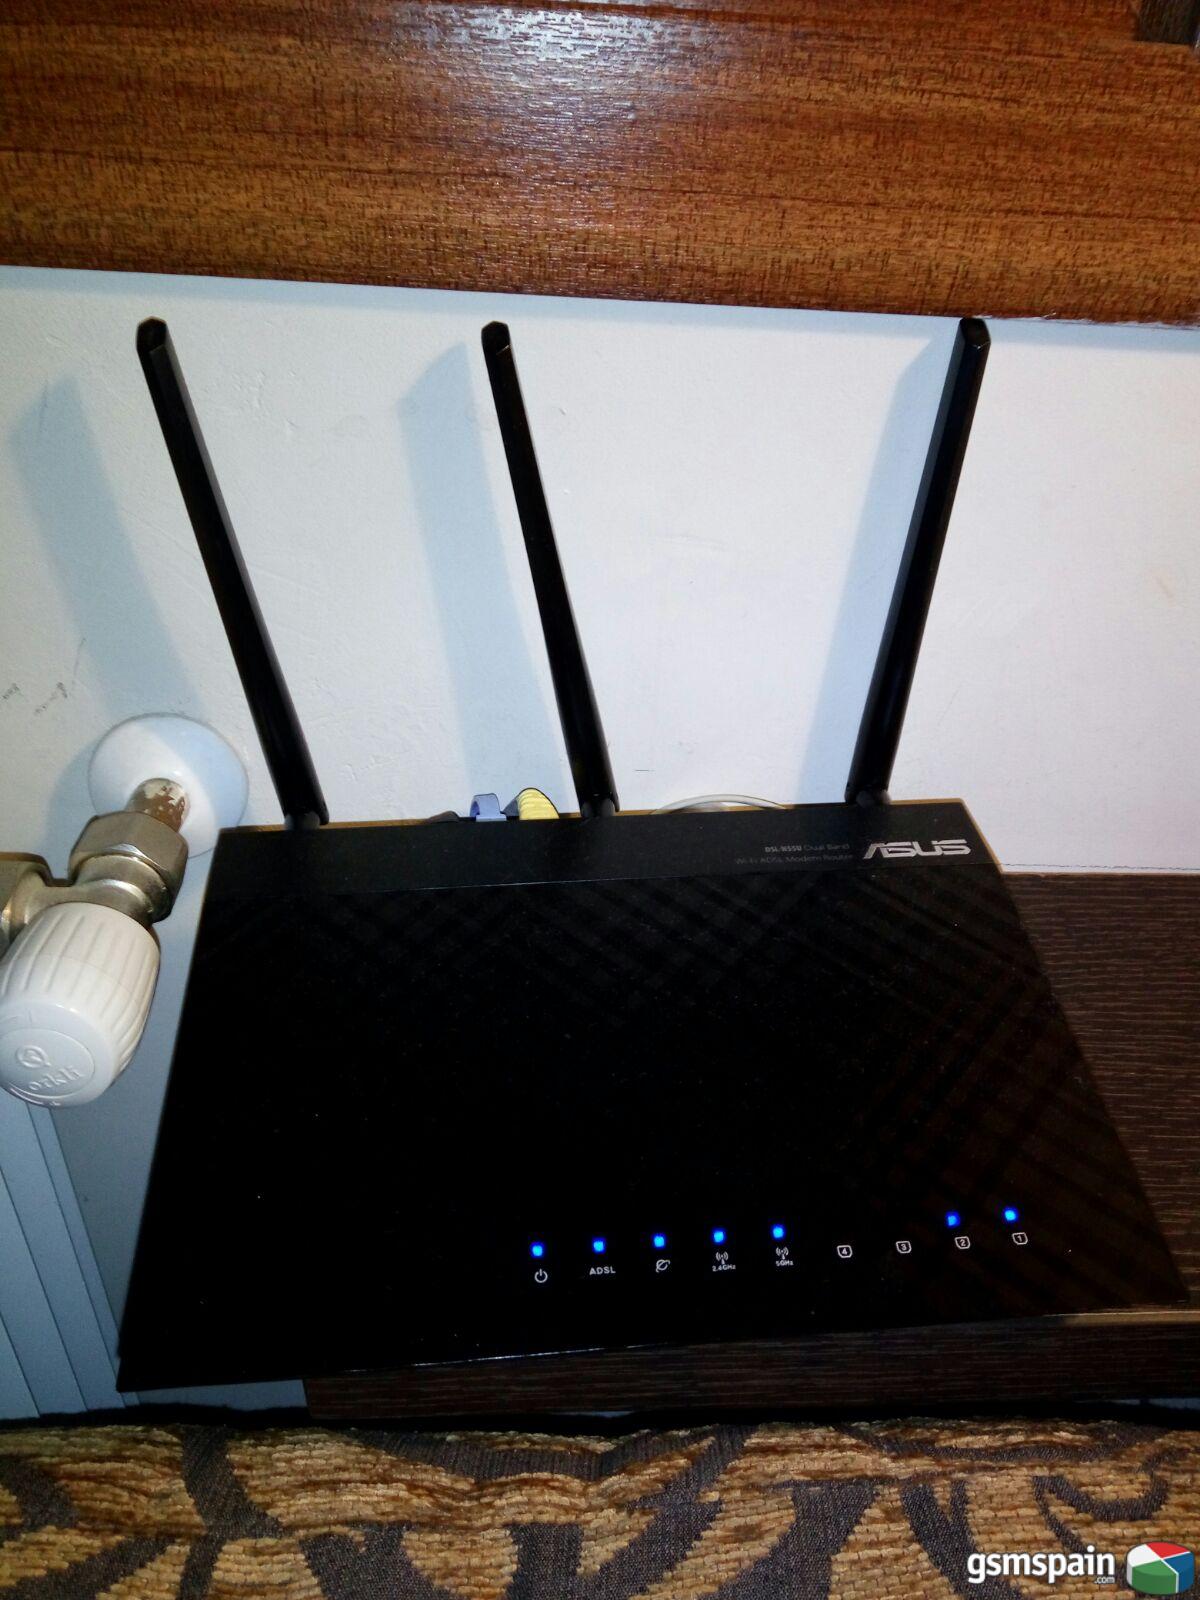 [VENDO] ASUS DSL-N55U - Mdem router inalmbrico N600 Dual-Band ADSL2+ Gigabit, Annex A